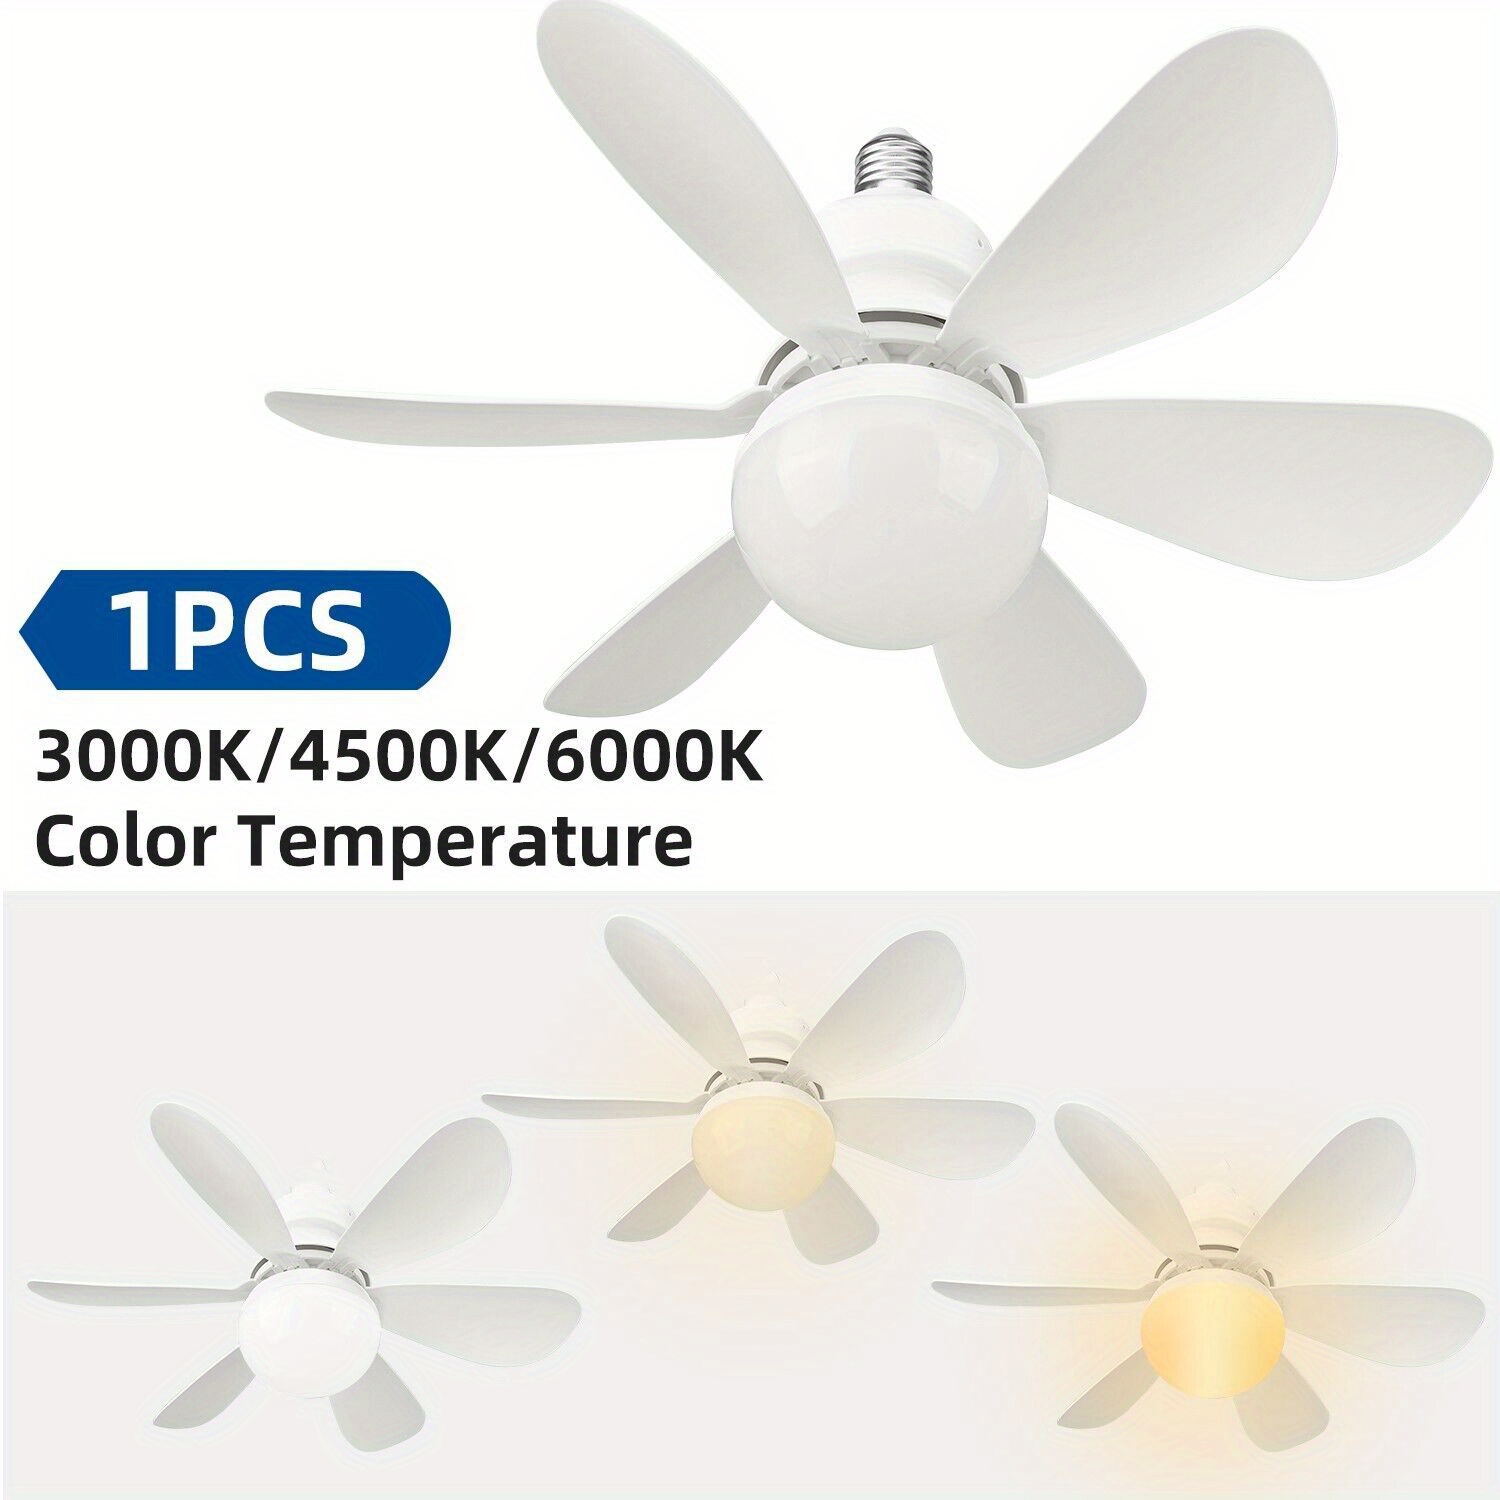 

1pc Ceiling Fan Light 6 Blades With Remote Control White Chandelier Light Indoor Fan, E27 Socket Fan 30w 3 Speed For Bathroom, Bedroom, Kitchen, Living Room